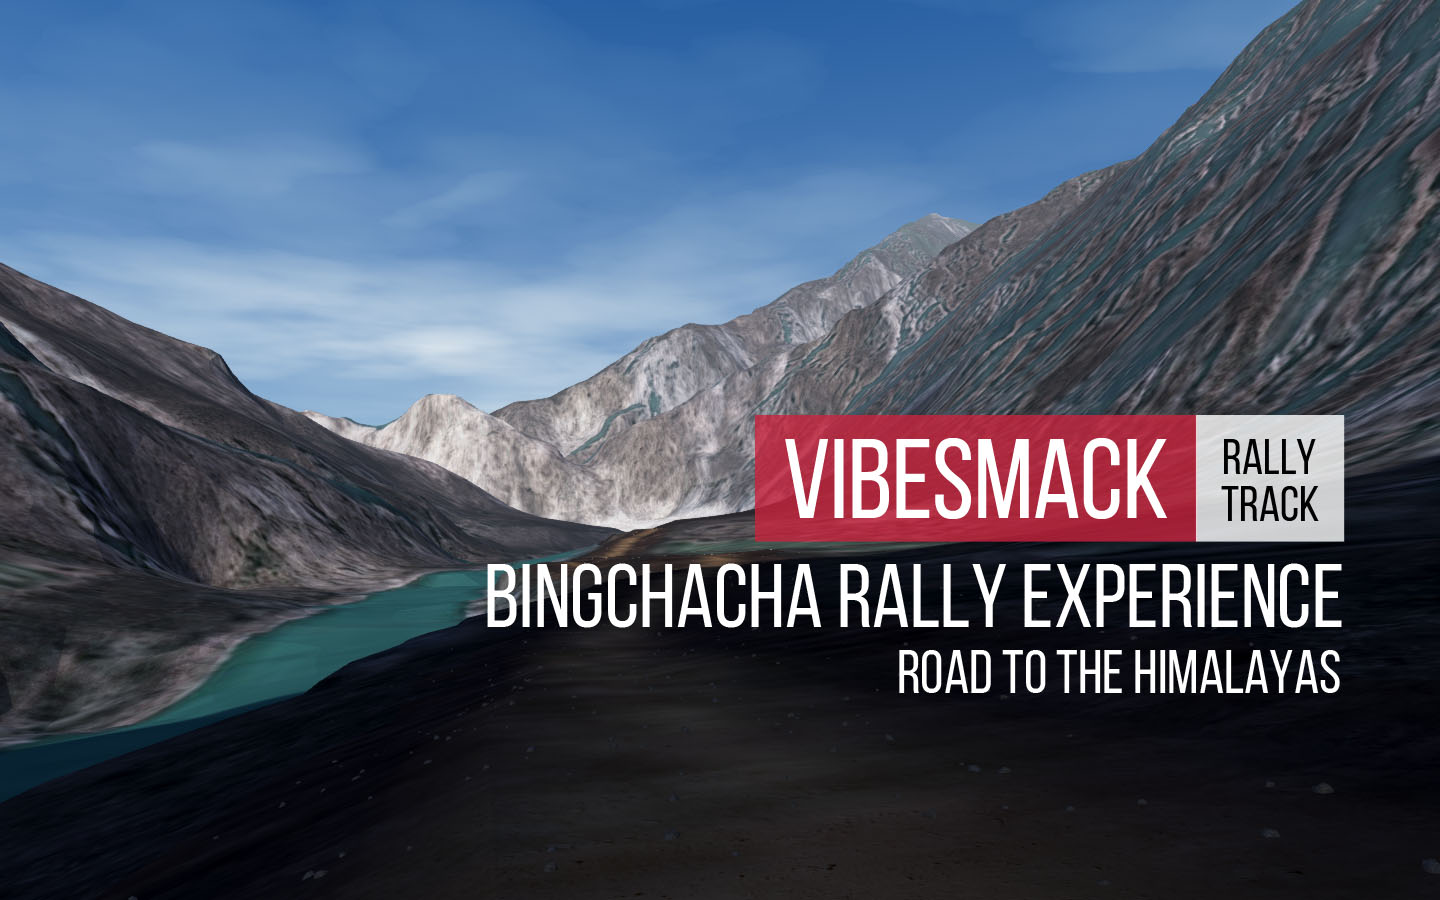 VibeSmack Race Track - Bingchacha Rally Experience - Road to the Himalayas